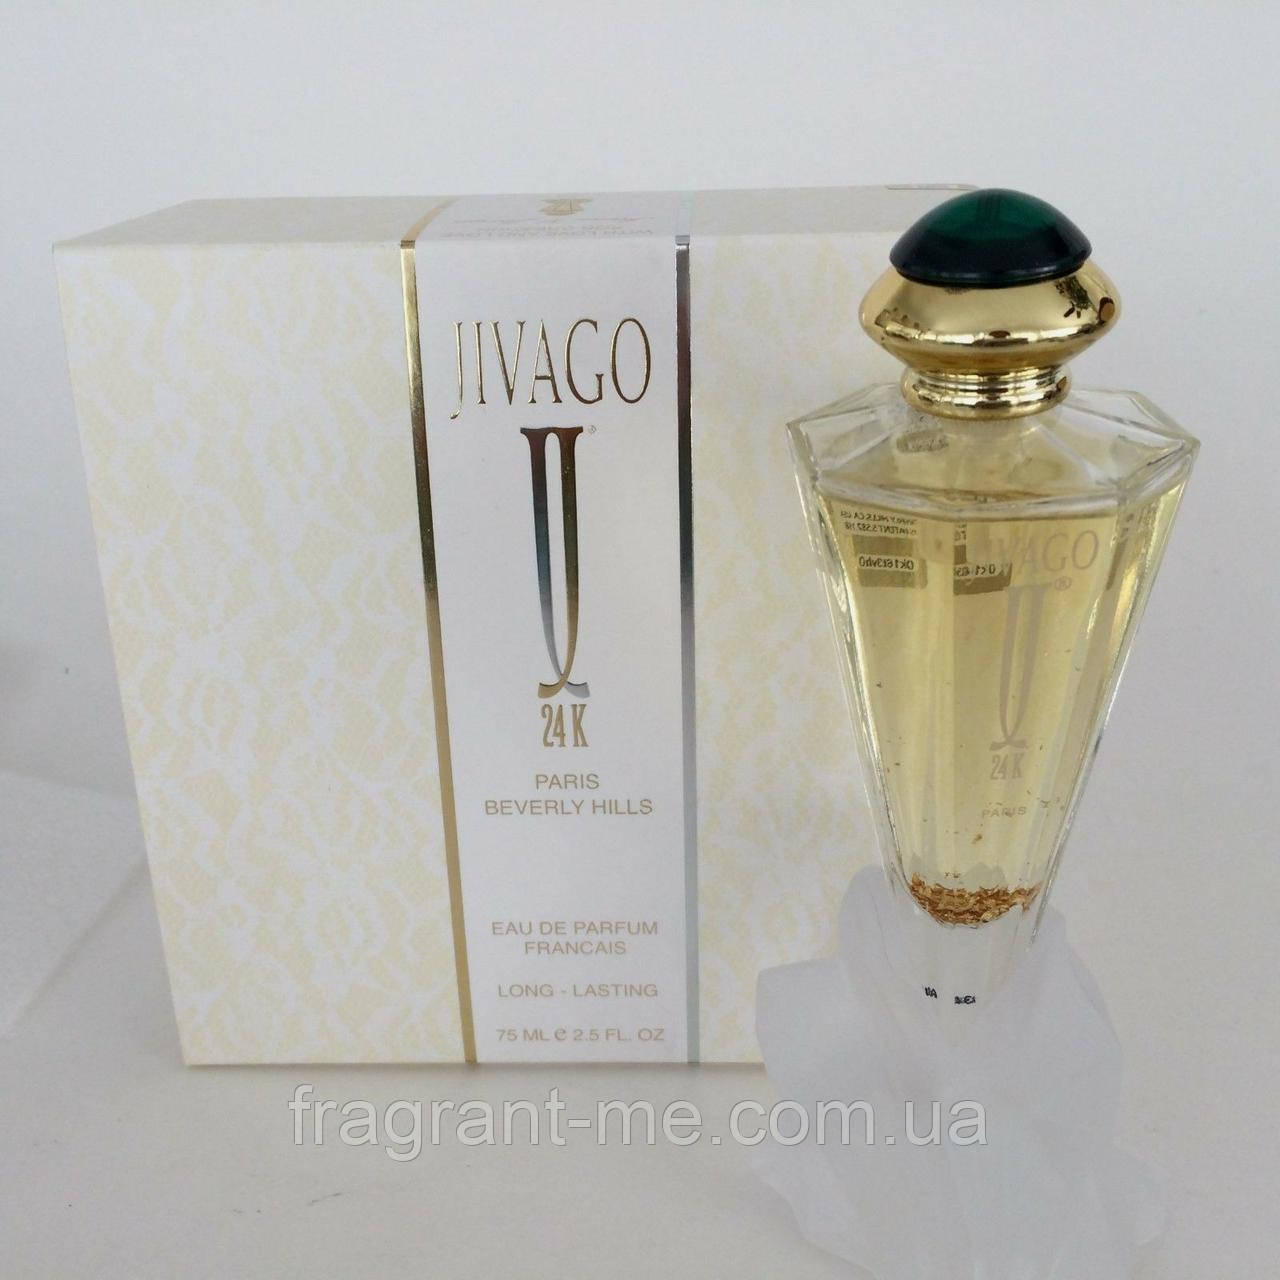 Jivago — 24K For Women (1995) — Парфумована вода 5 мл (пробник) — Перший випуск, формула аромату 1995 року